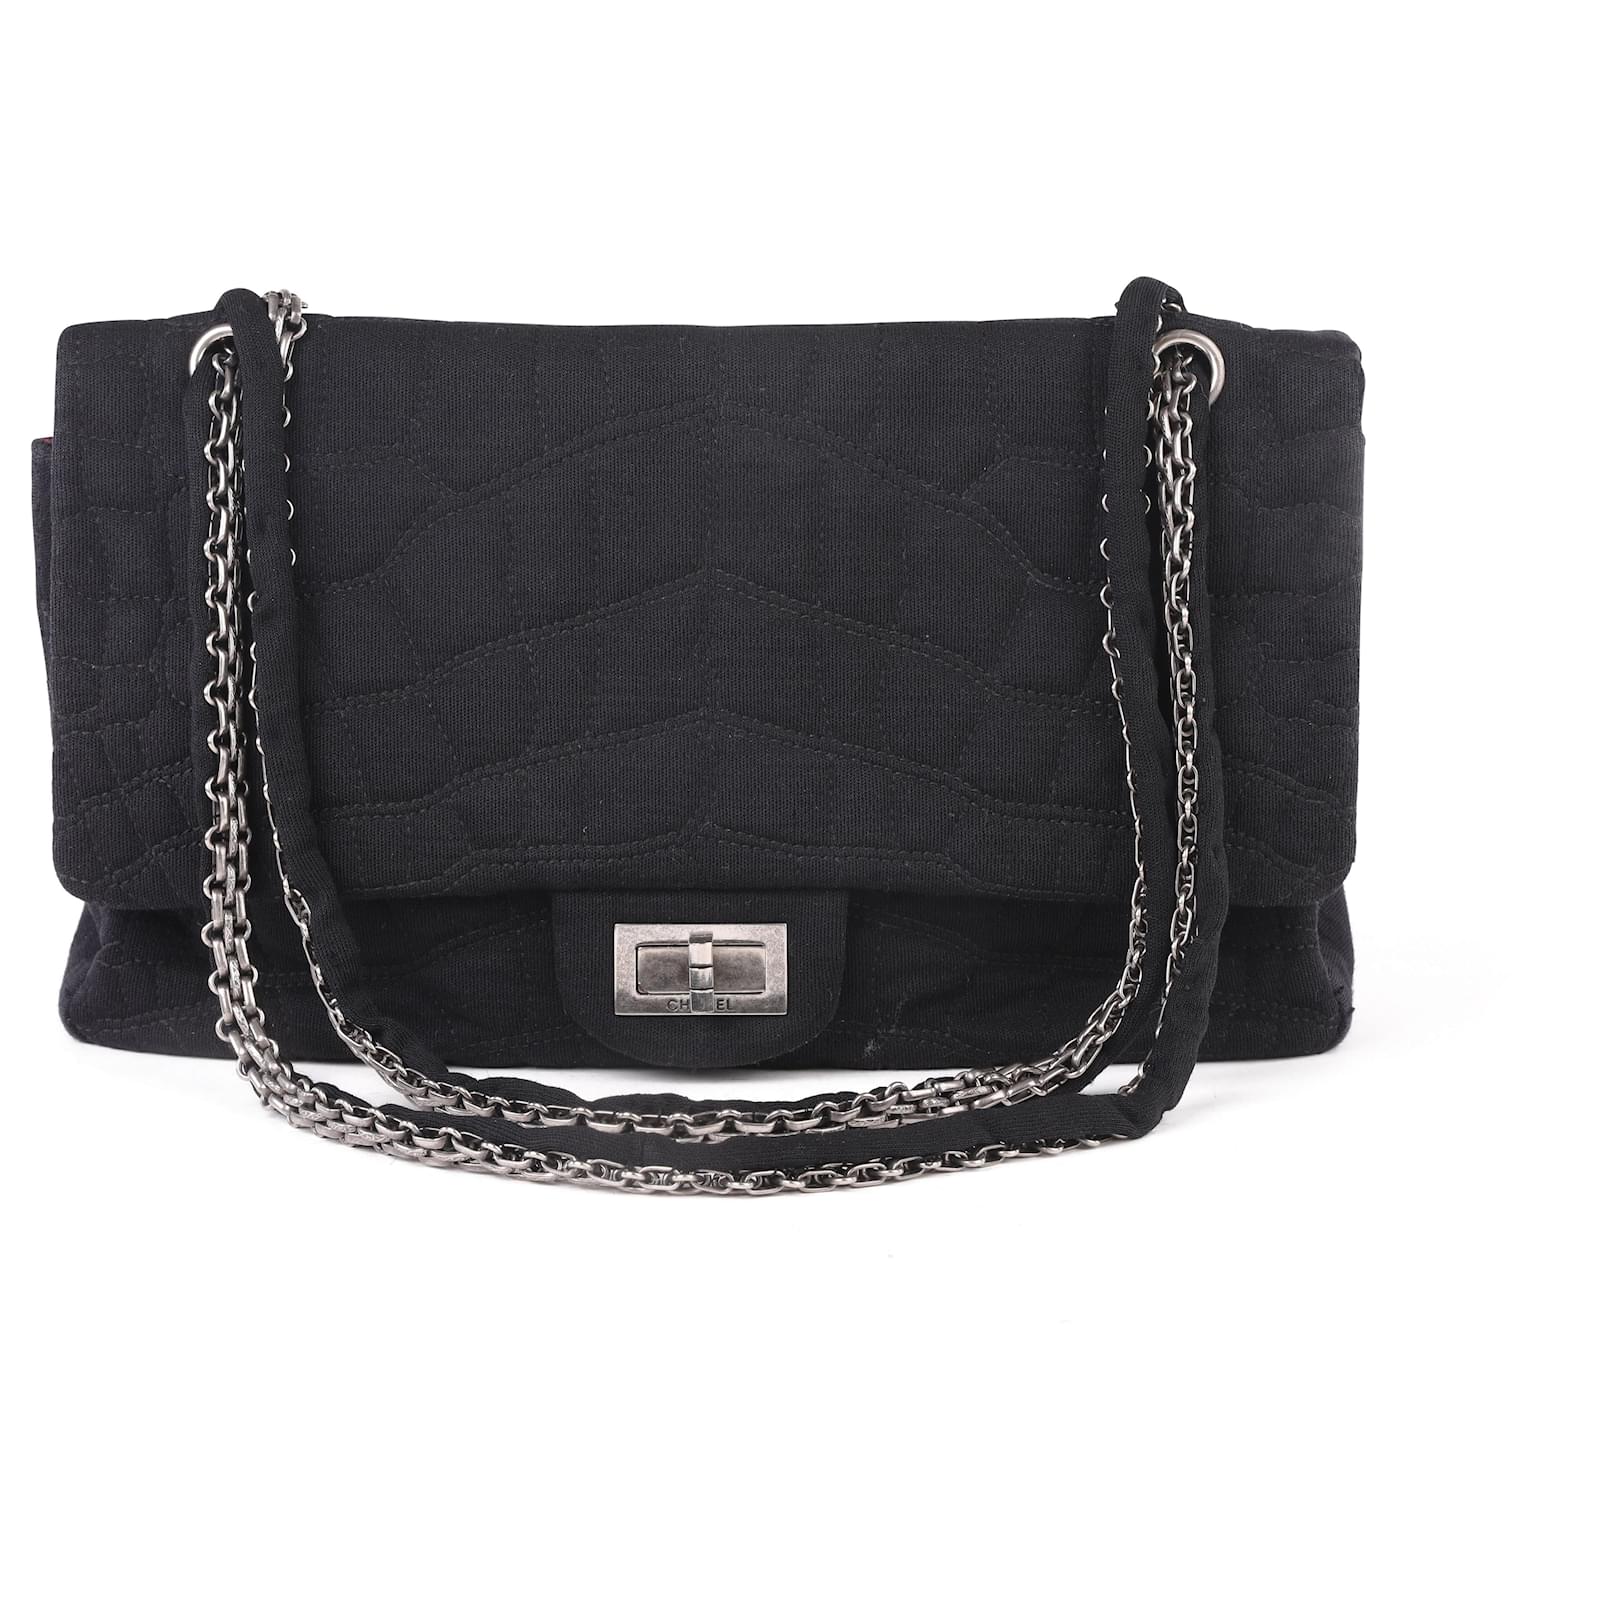 Chanel Black Satin Croc Embossed 2.55 Reissue Flap Bag - Chanel